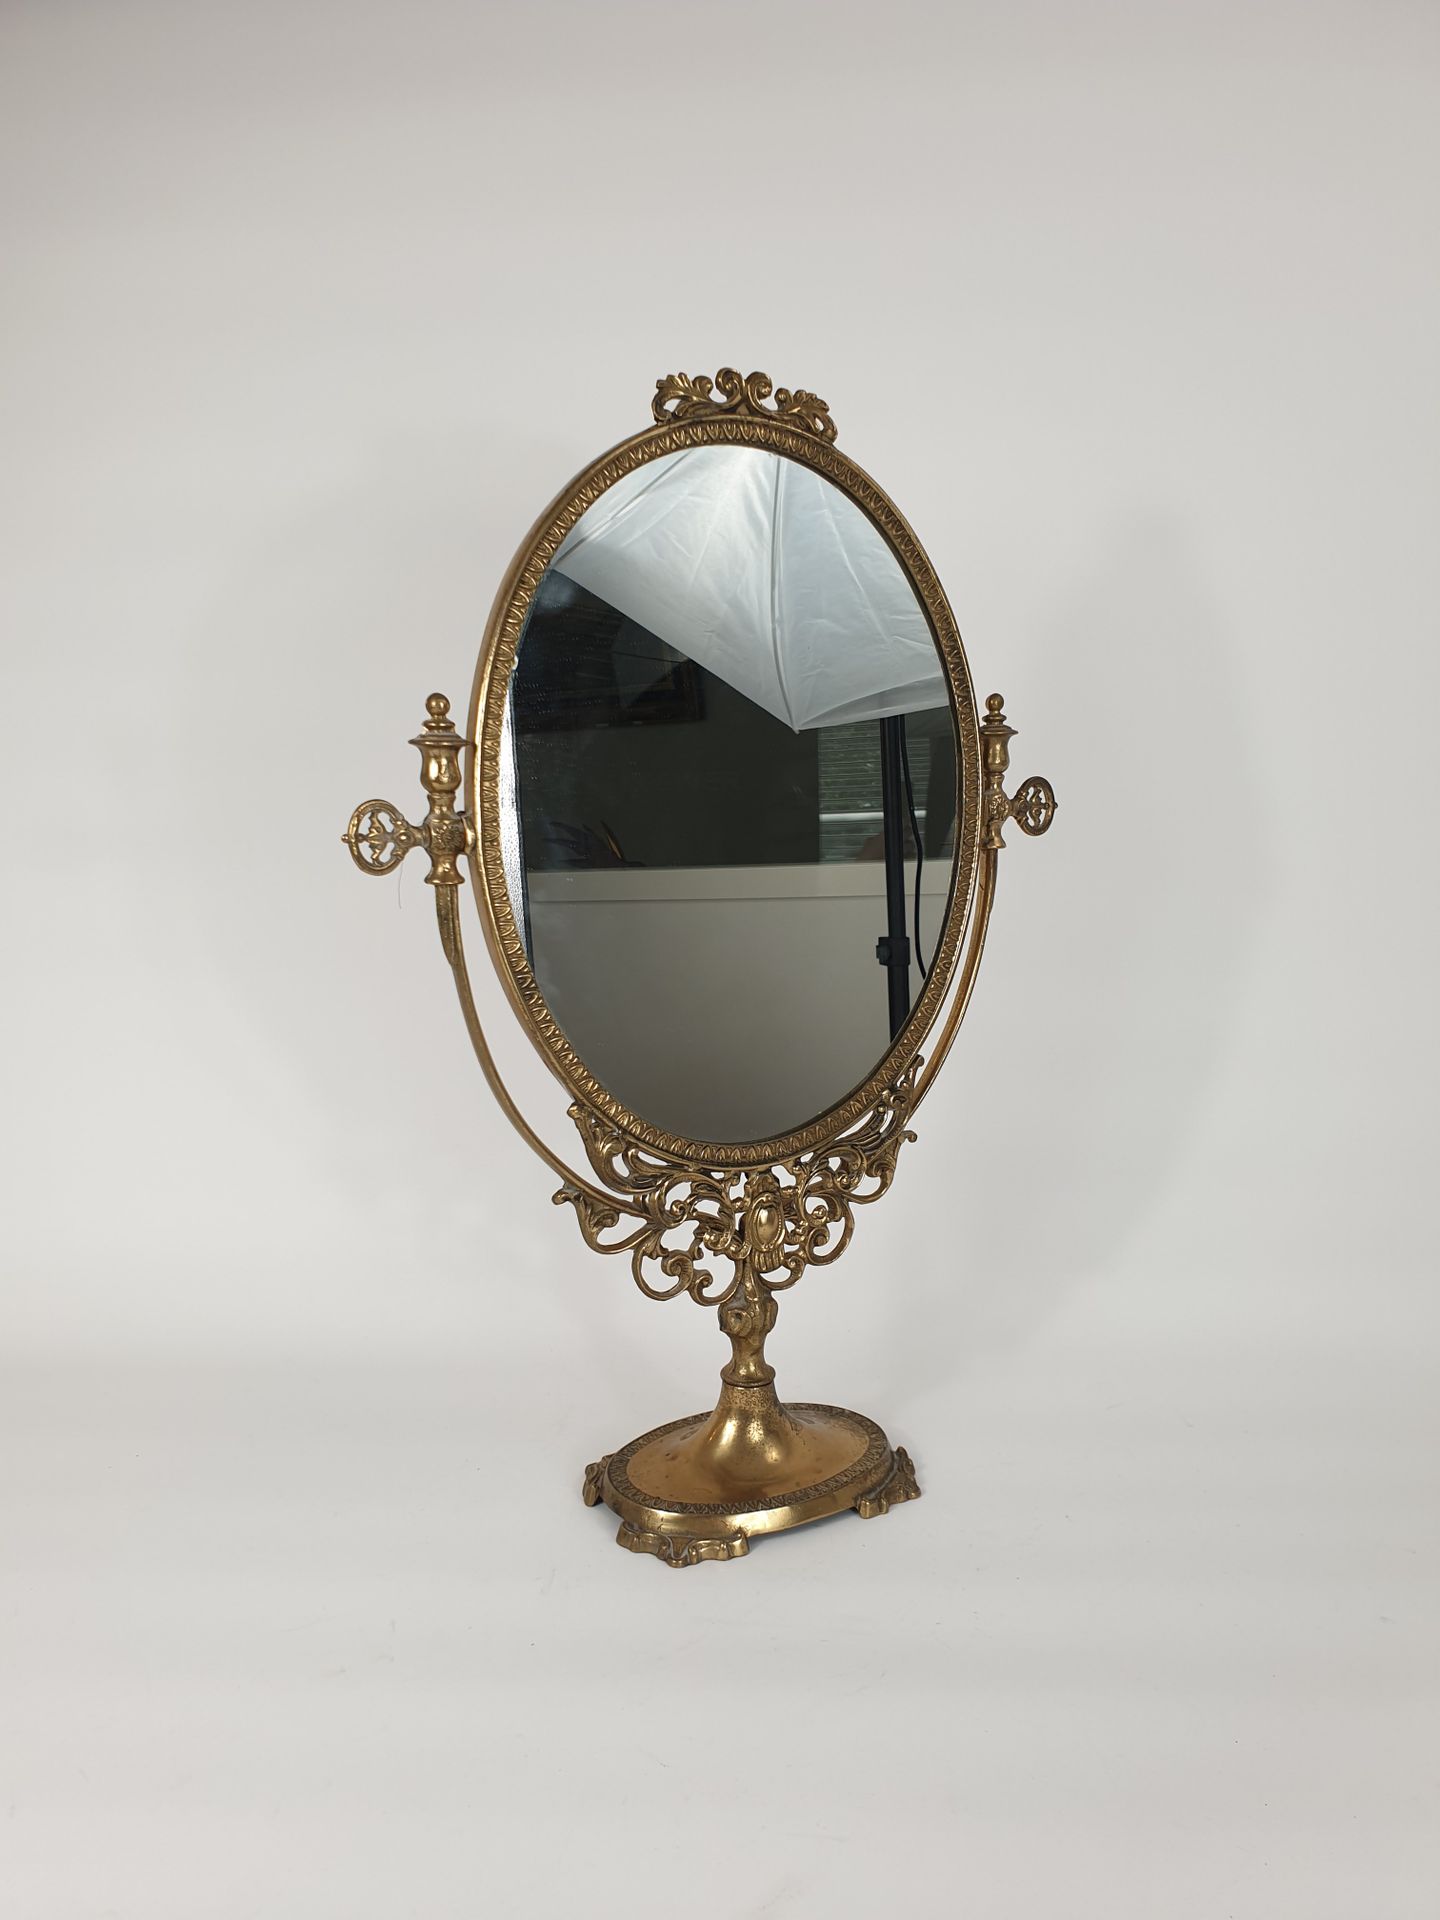 Null 黄铜材质的椭圆倾斜桌镜。
54.5 x 39 x 12厘米